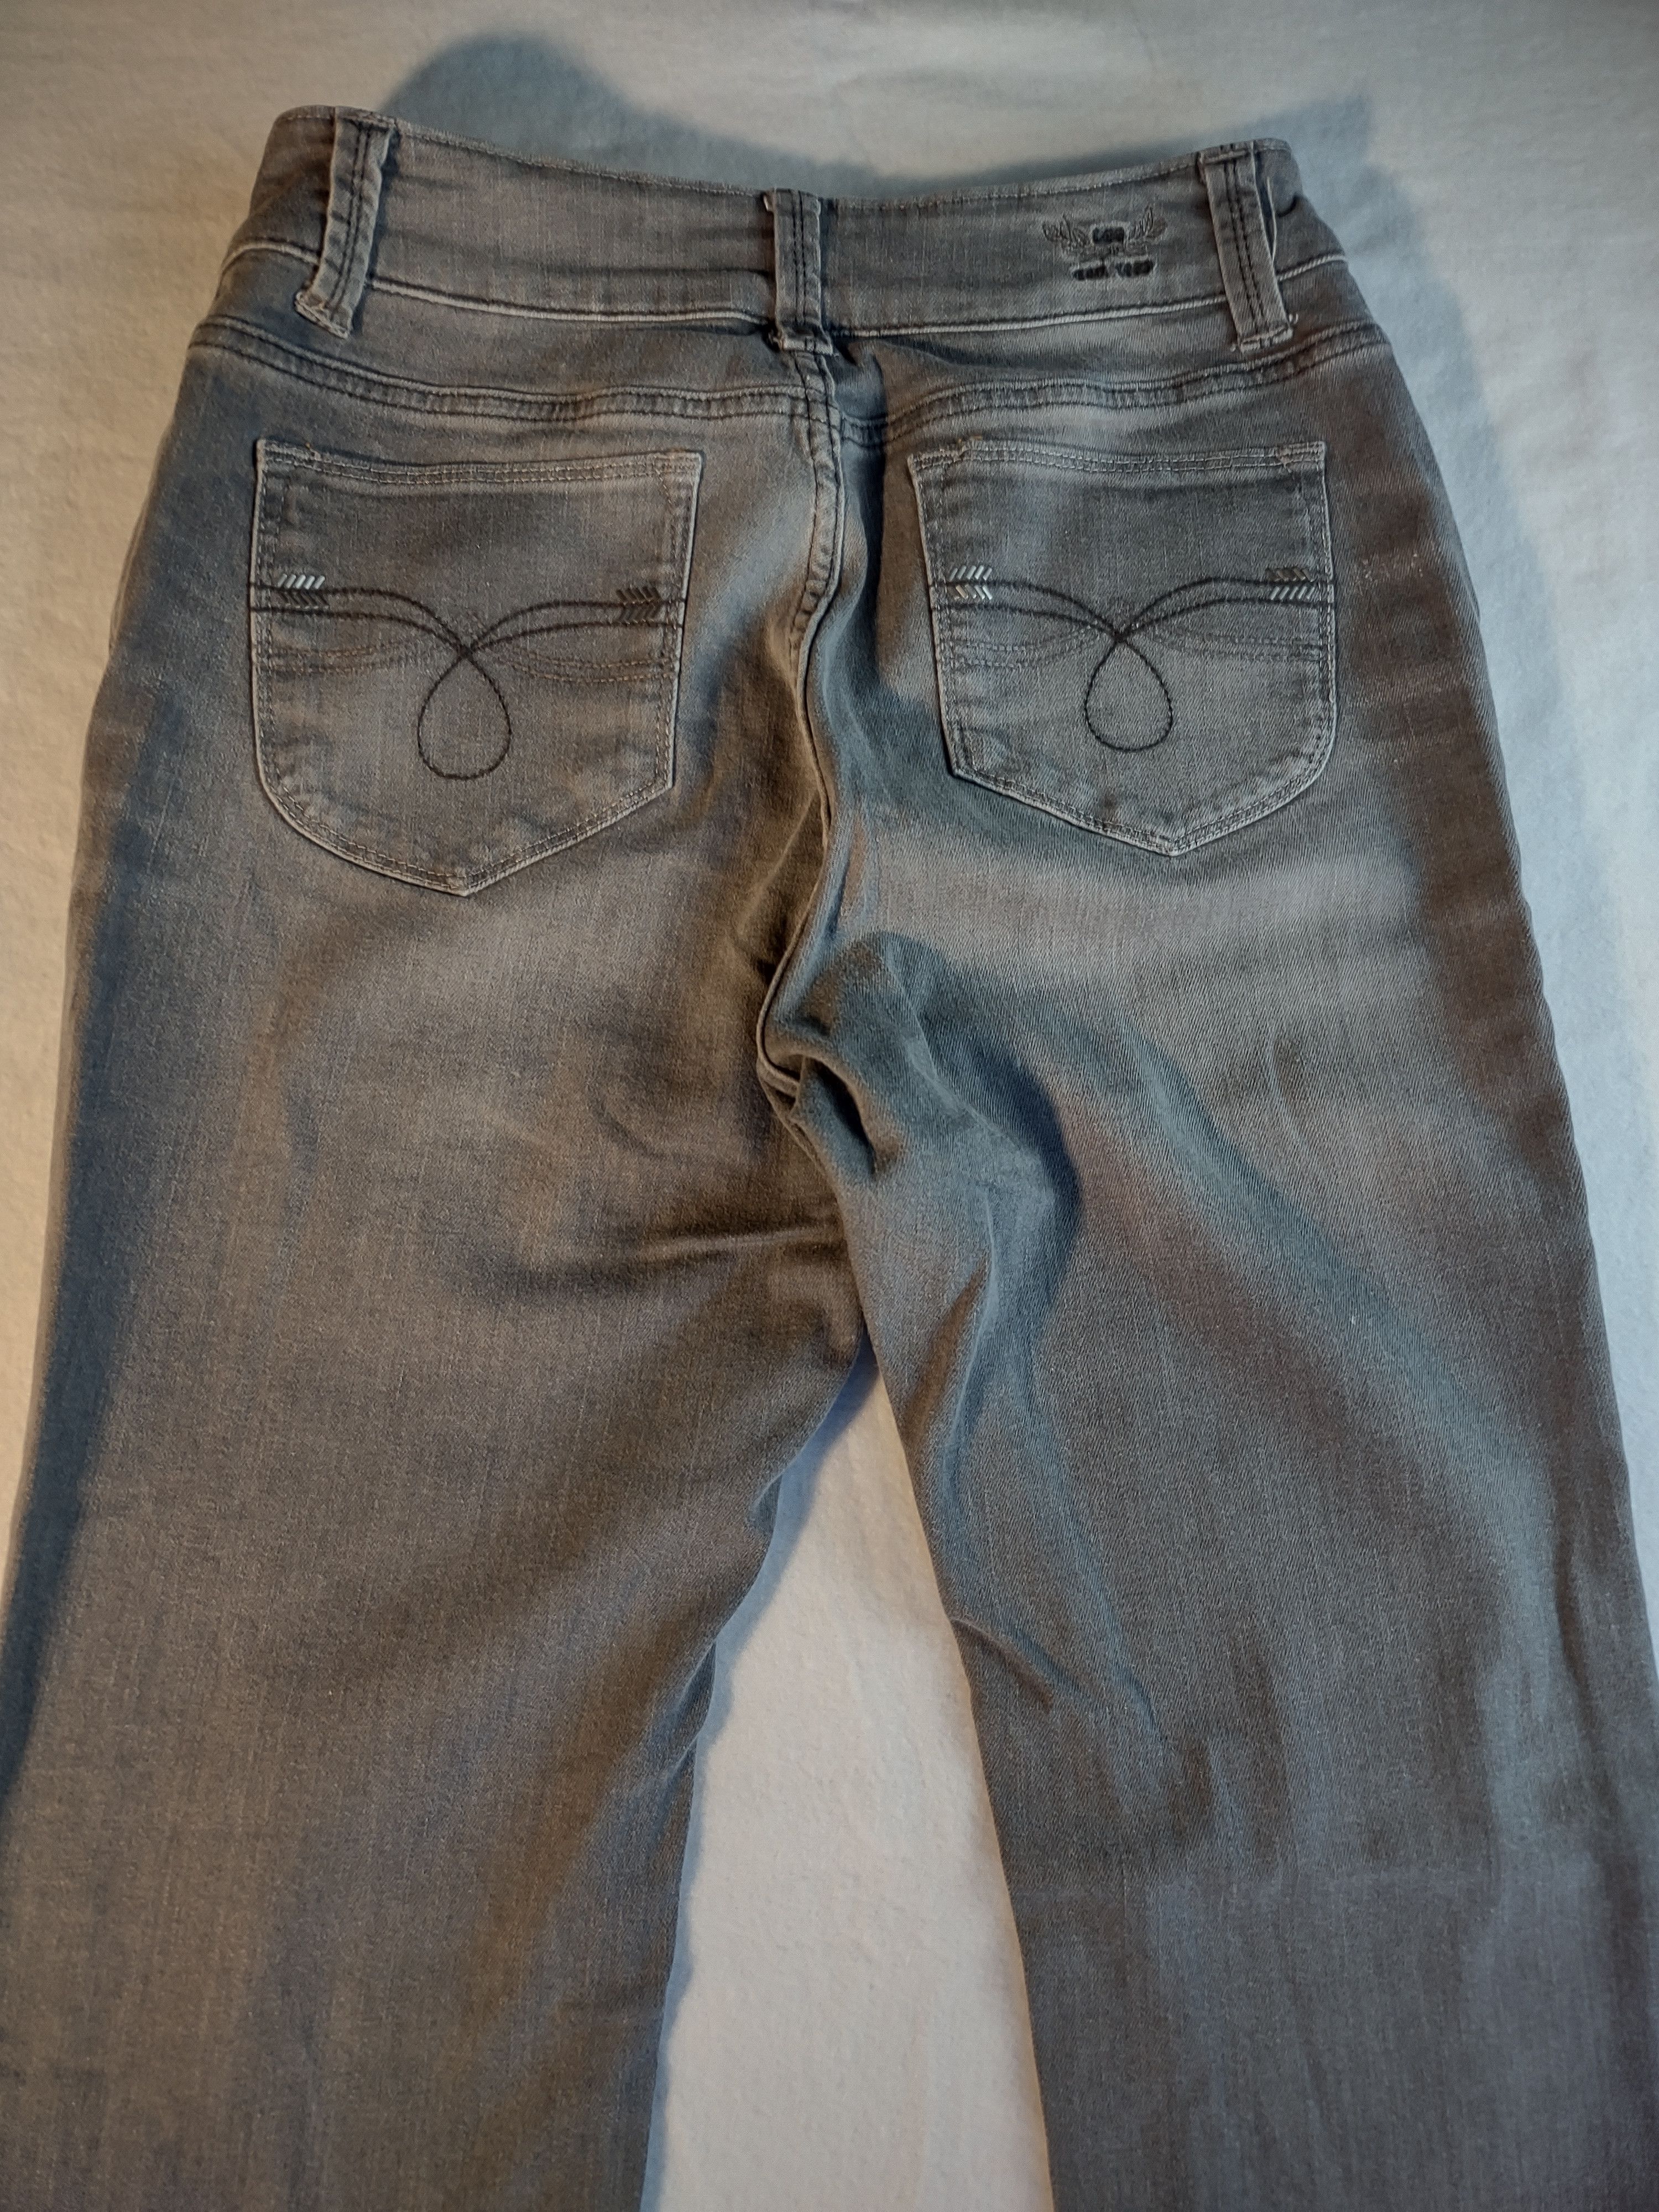 Lee Lee Perfect Fit Just Below Waist denim jeans gray ash wash Size 28" / US 6 / IT 42 - 7 Thumbnail